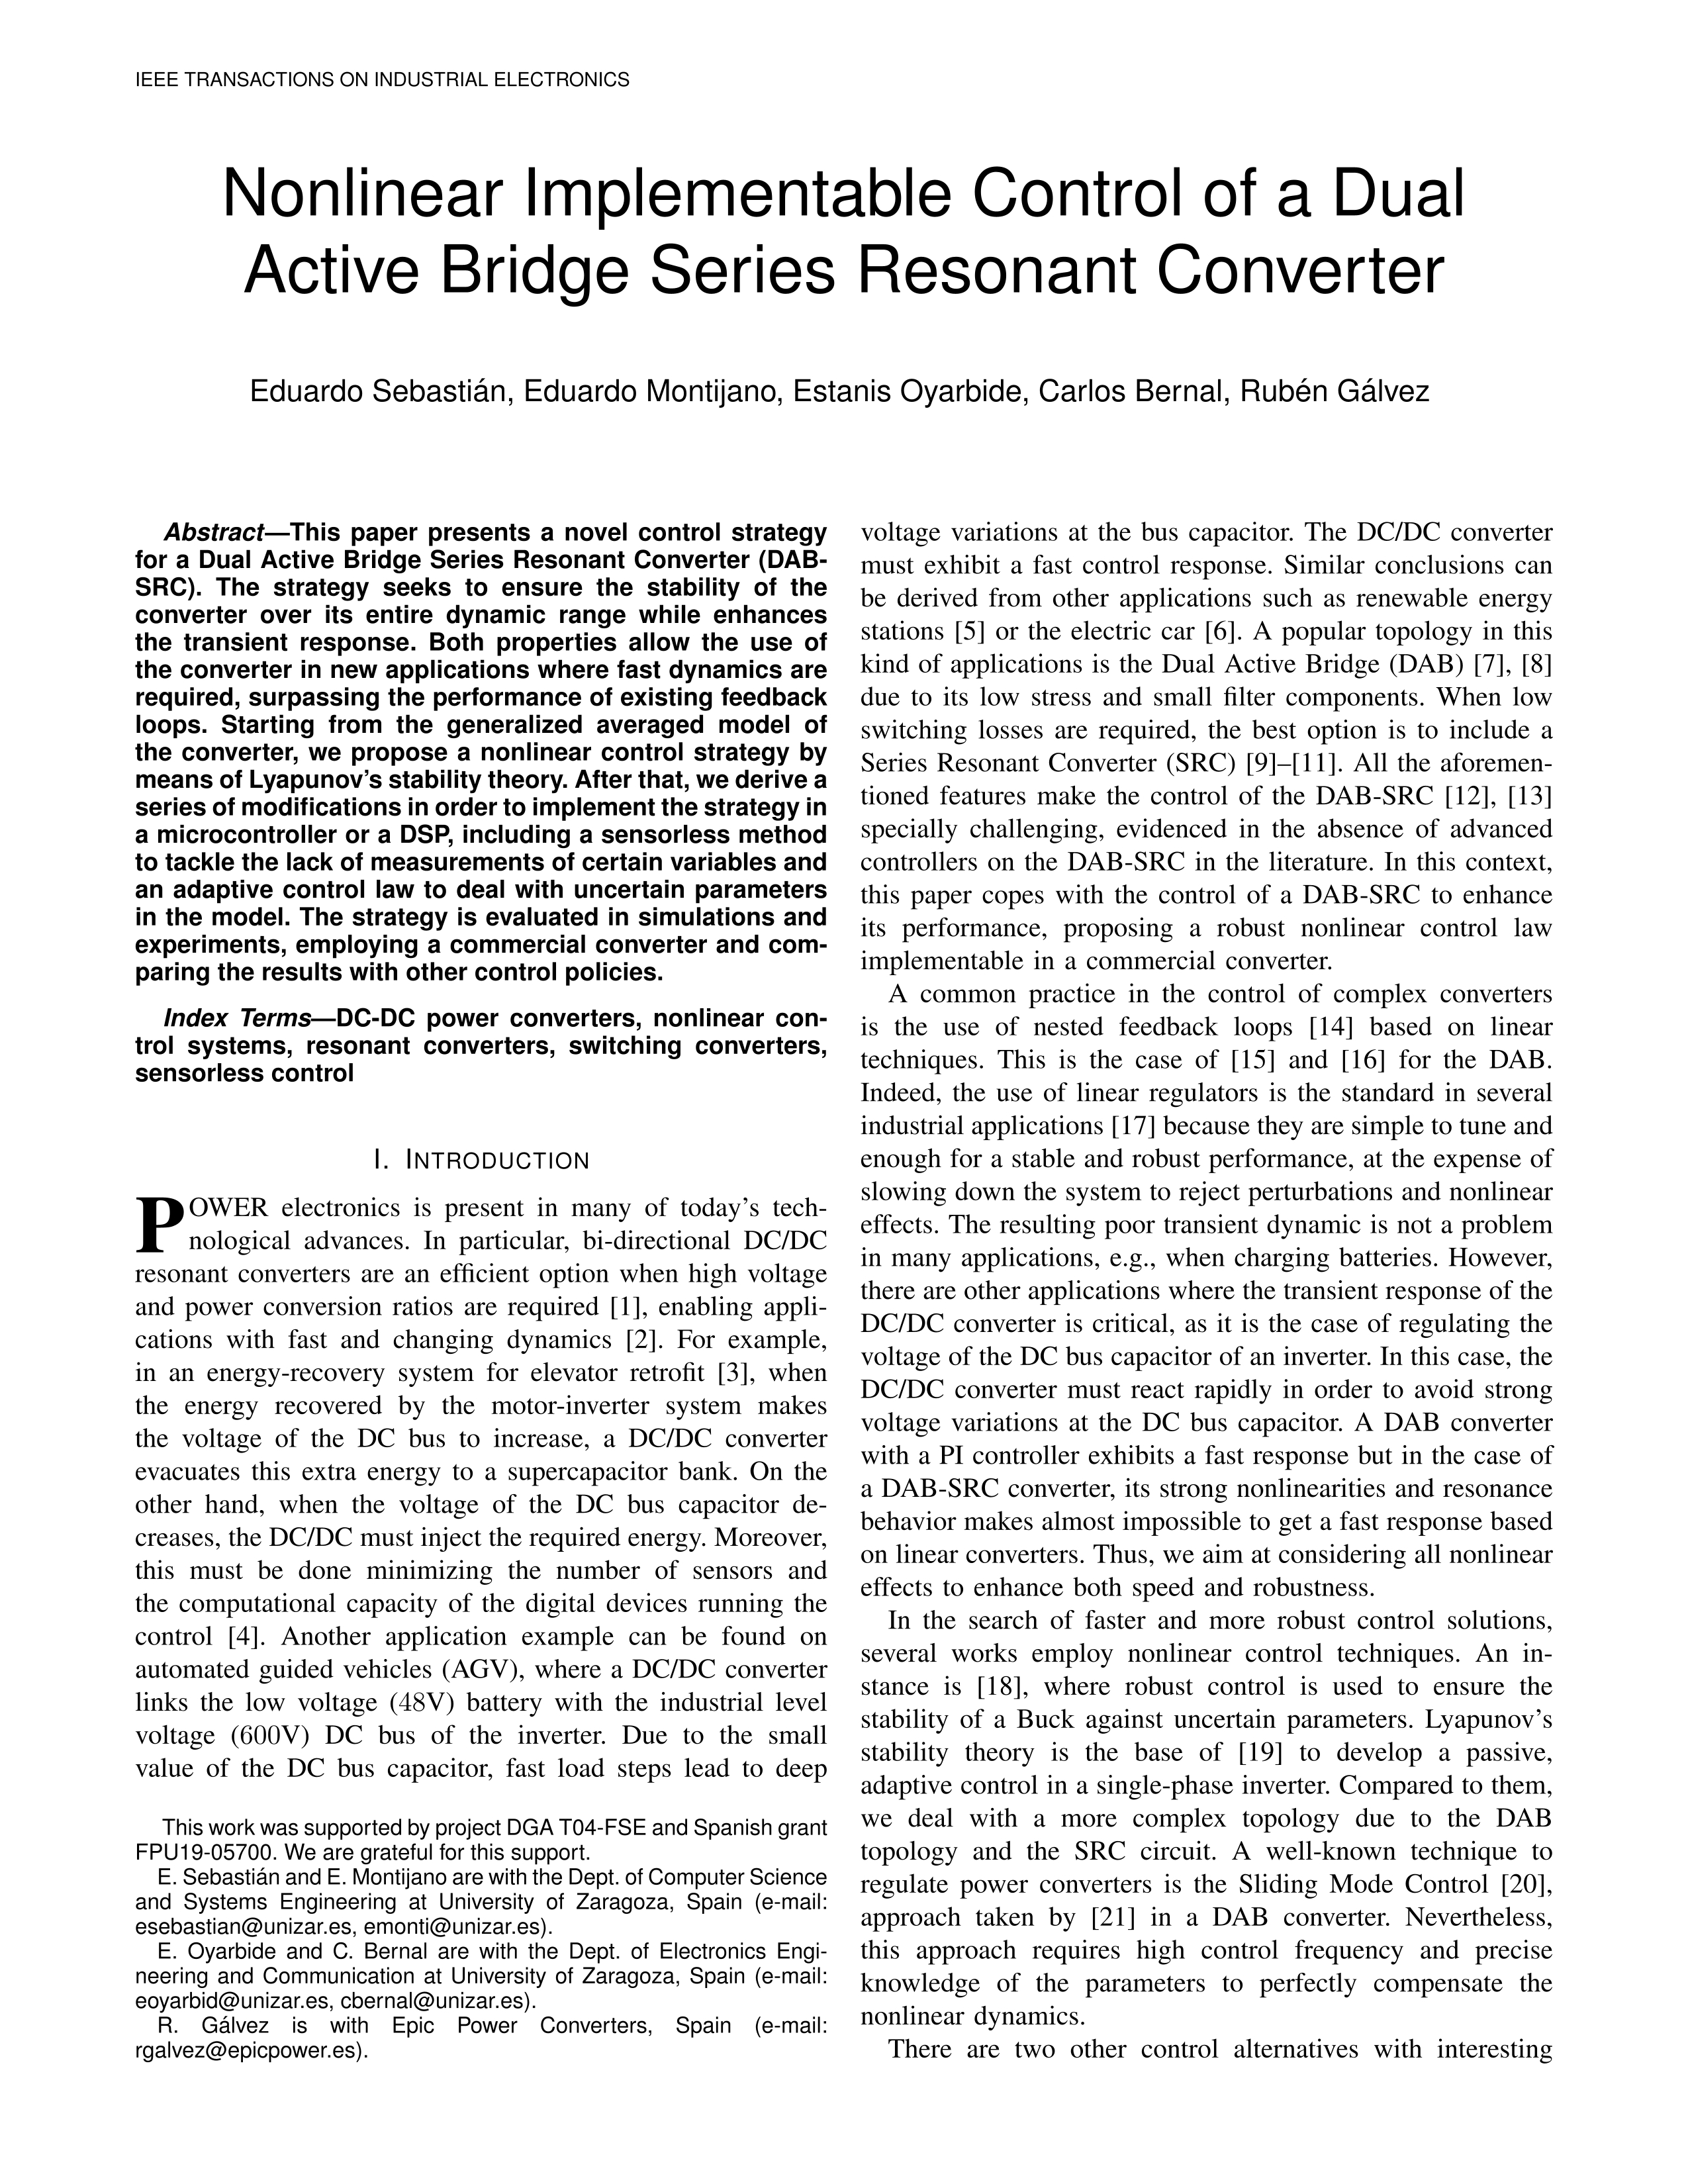 Nonlinear implementable control of a dual active bridge series resonant converter